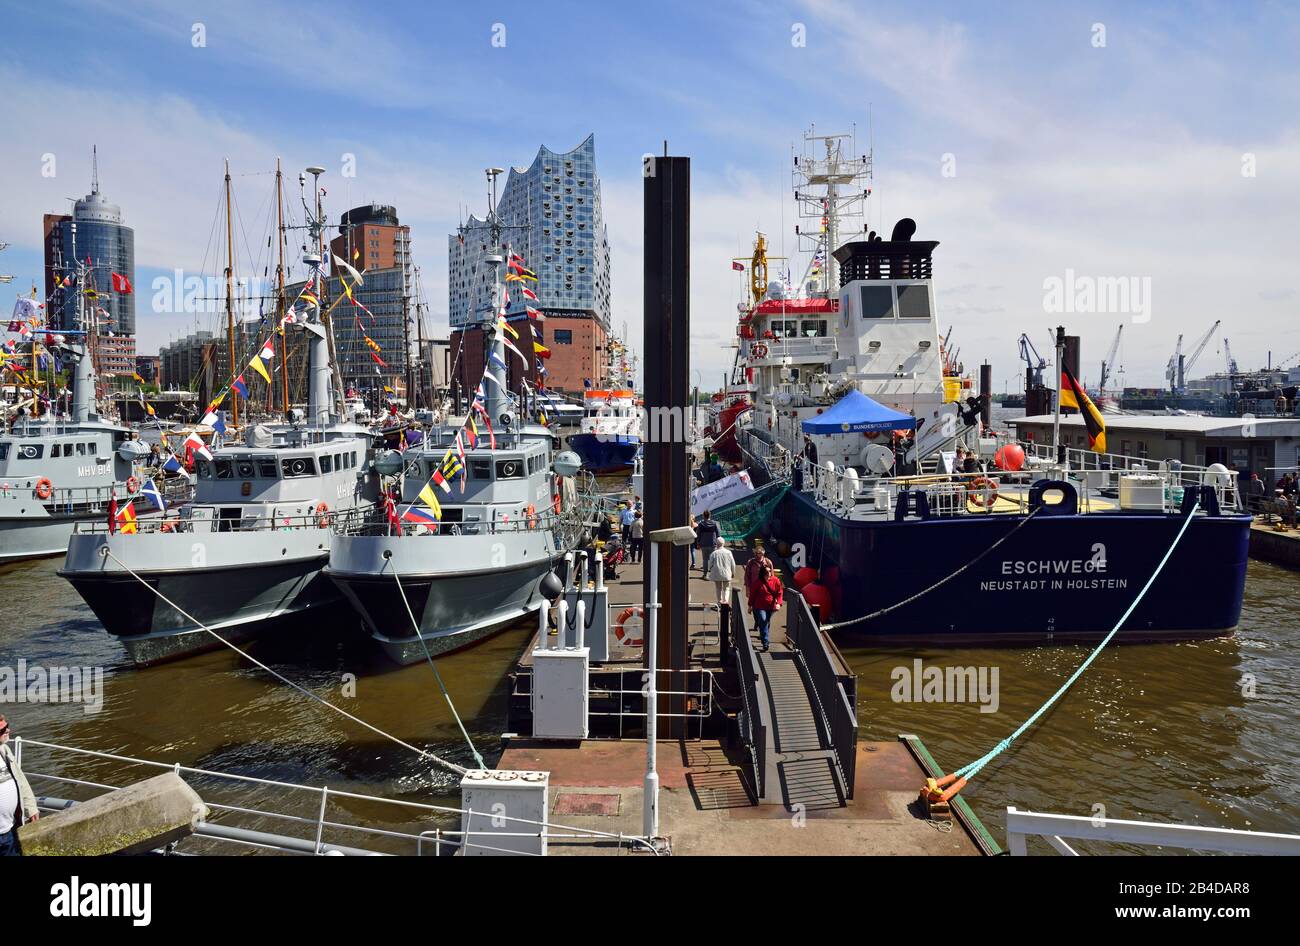 Europa, Germania, Città anseatica di Amburgo, Baumwall, Elbe, marina, Elbphilharmonie, HafenCity, Visita della flotta, Foto Stock